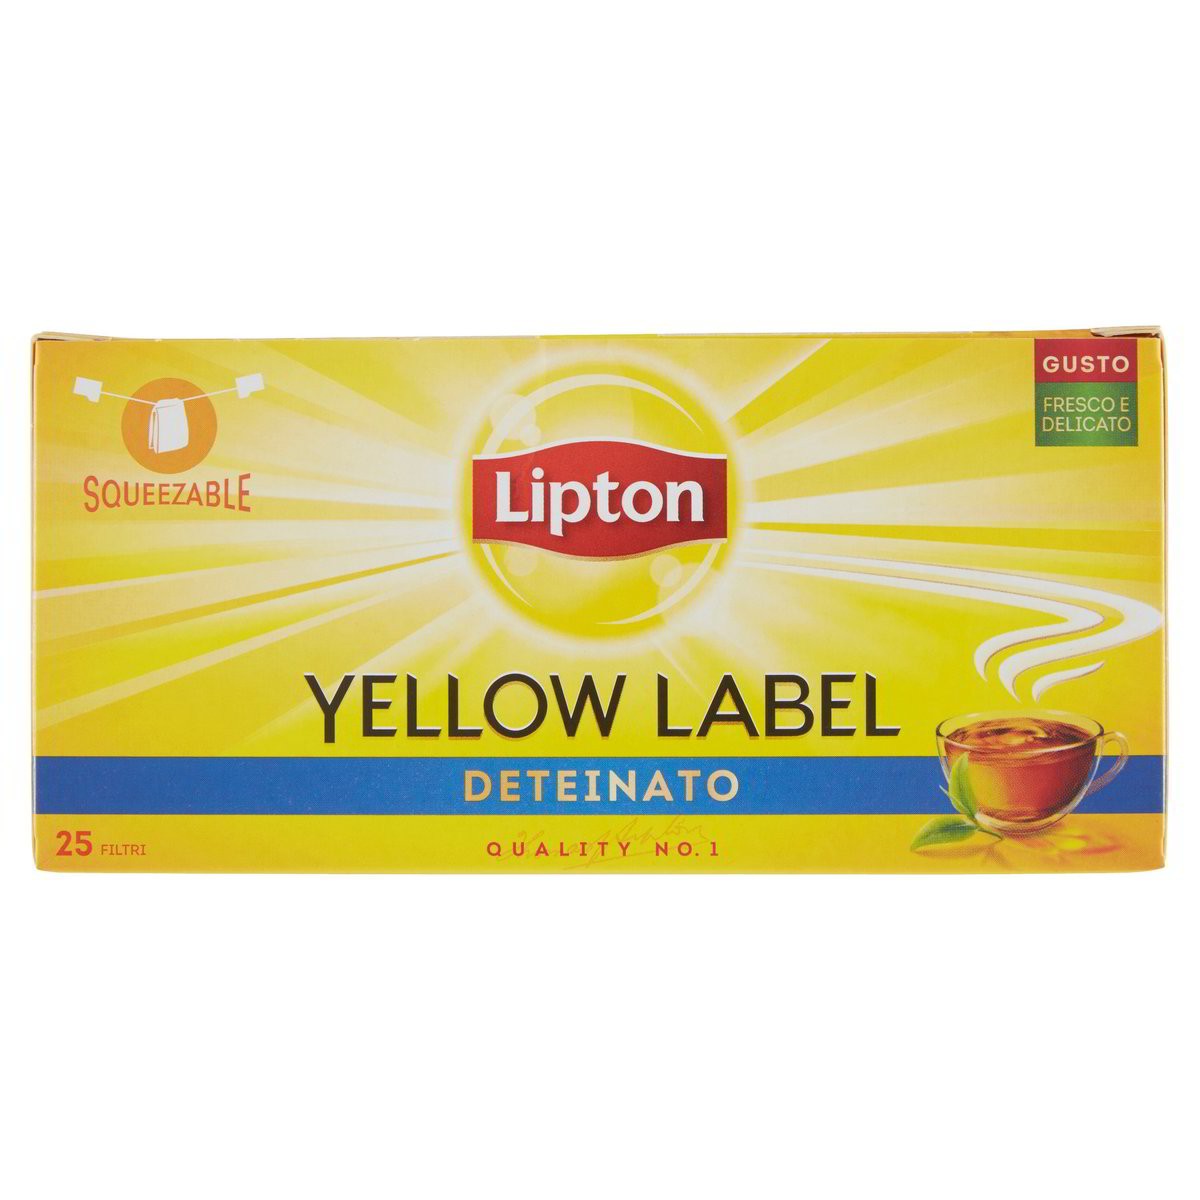 Lipton Tea Yellow Label deteinato